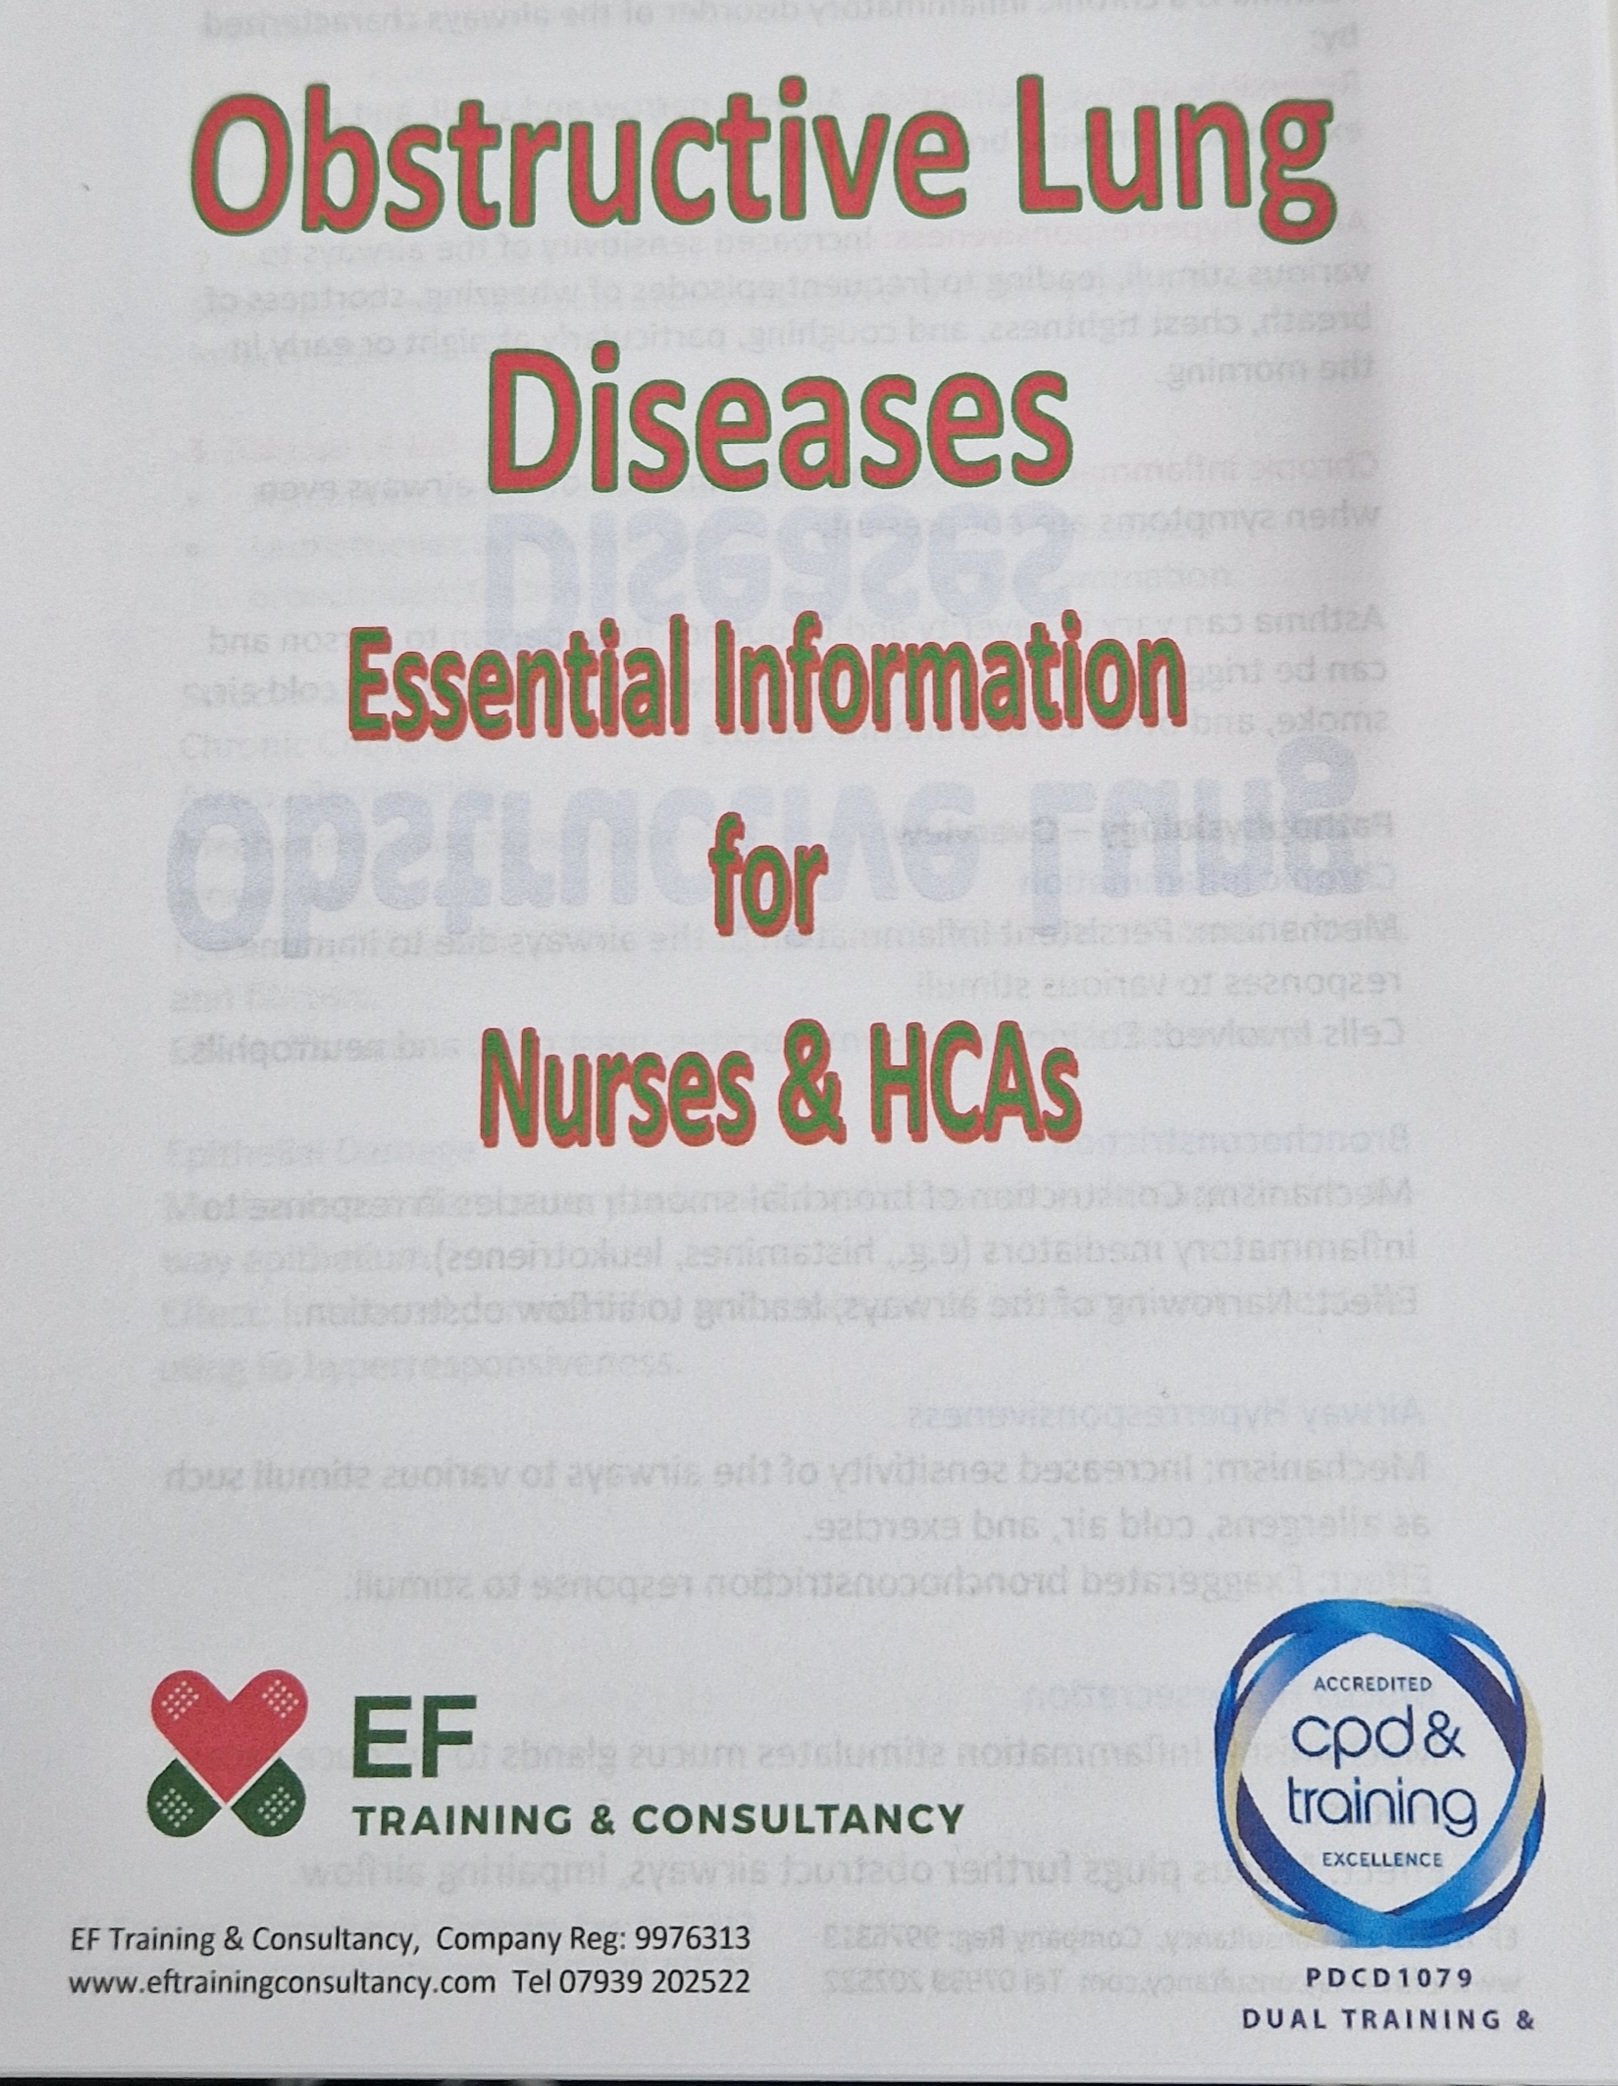  Obstructive Lung Disease - Essential Information for Nurses & HCAs